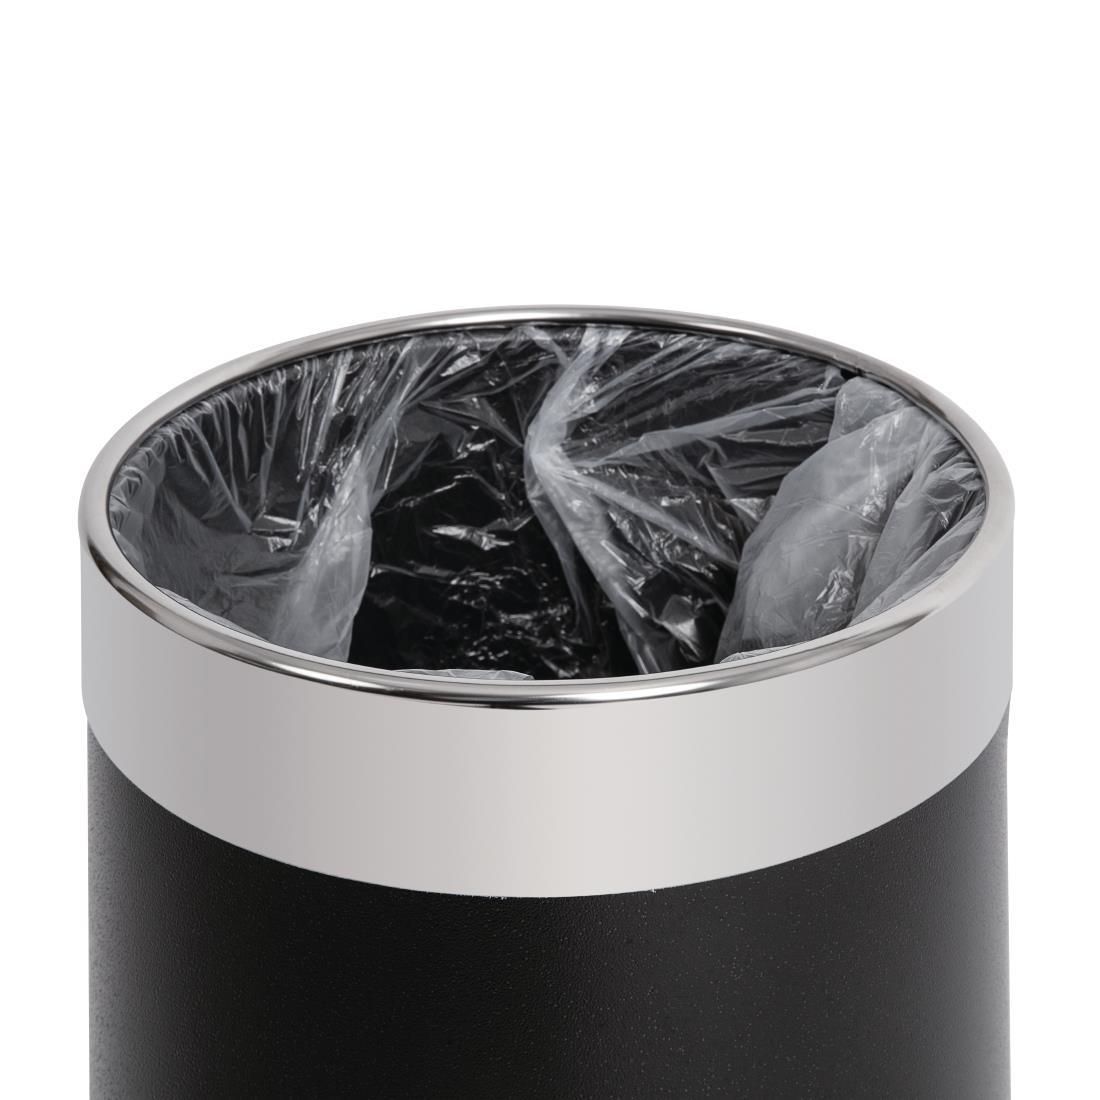 Bolero Black Waste Paper Bin with Silver Rim - Y805  - 4